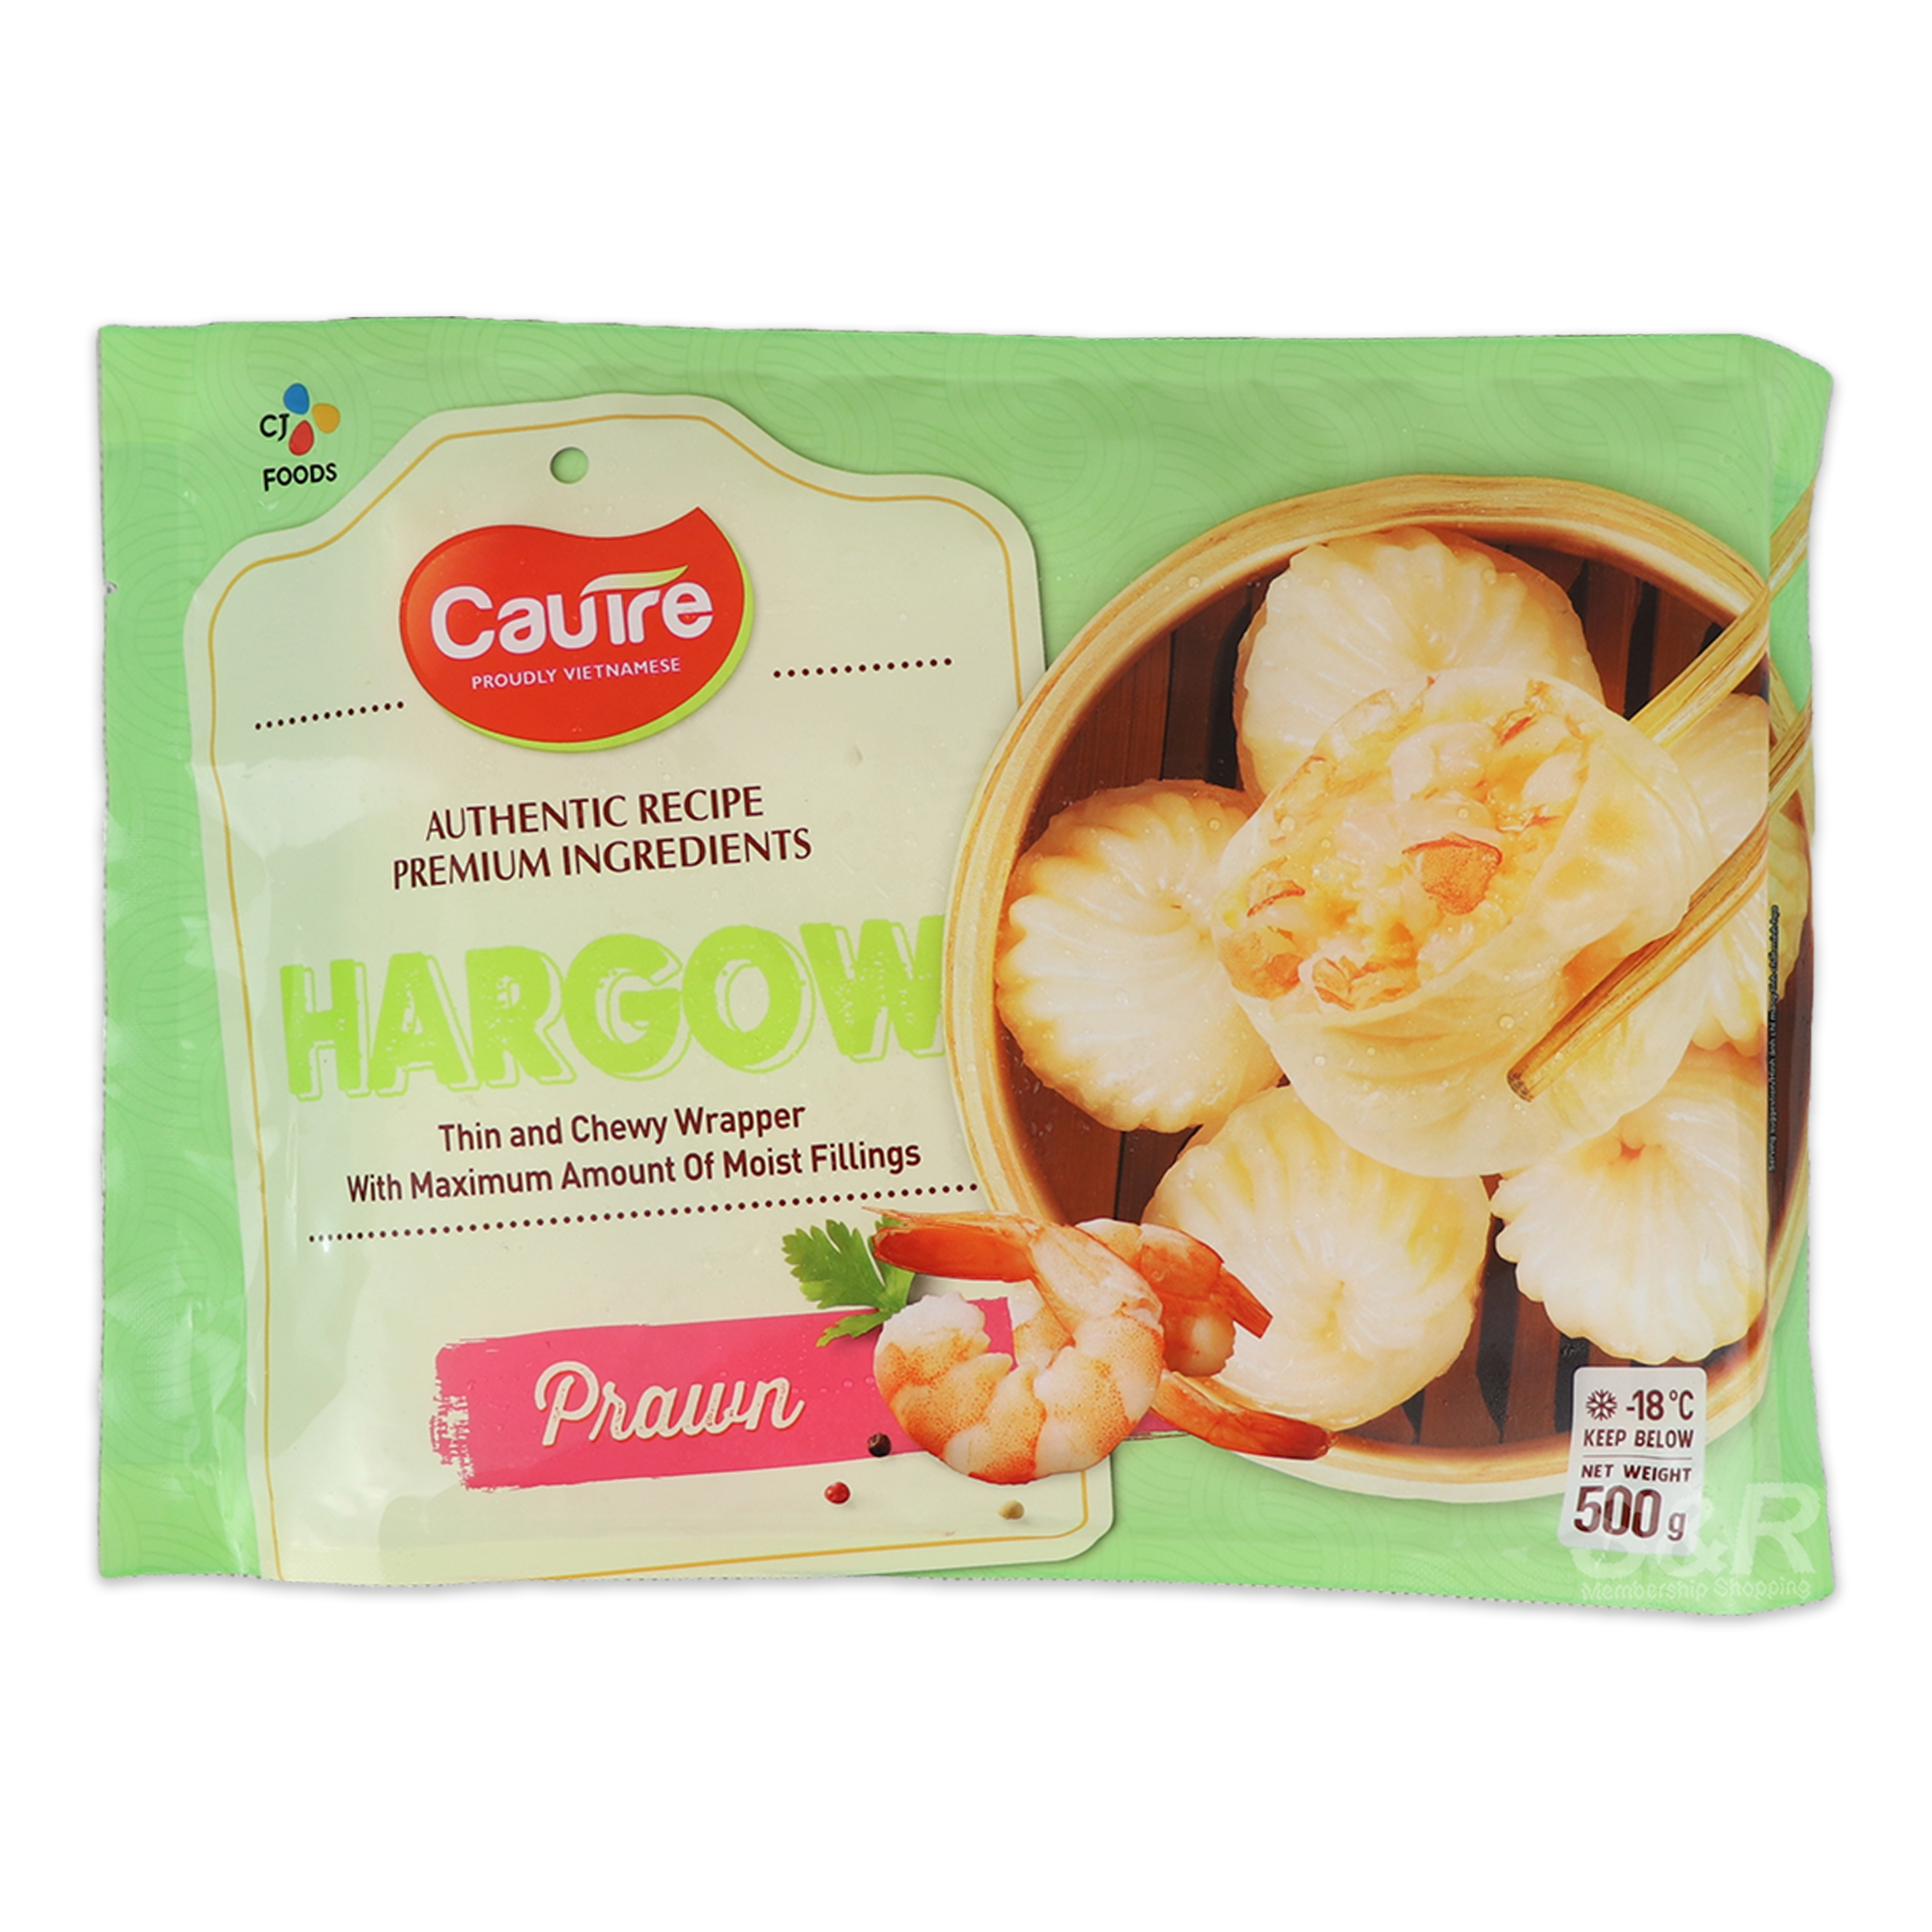 CJ Foods Cautre Prawn Hargow 500g